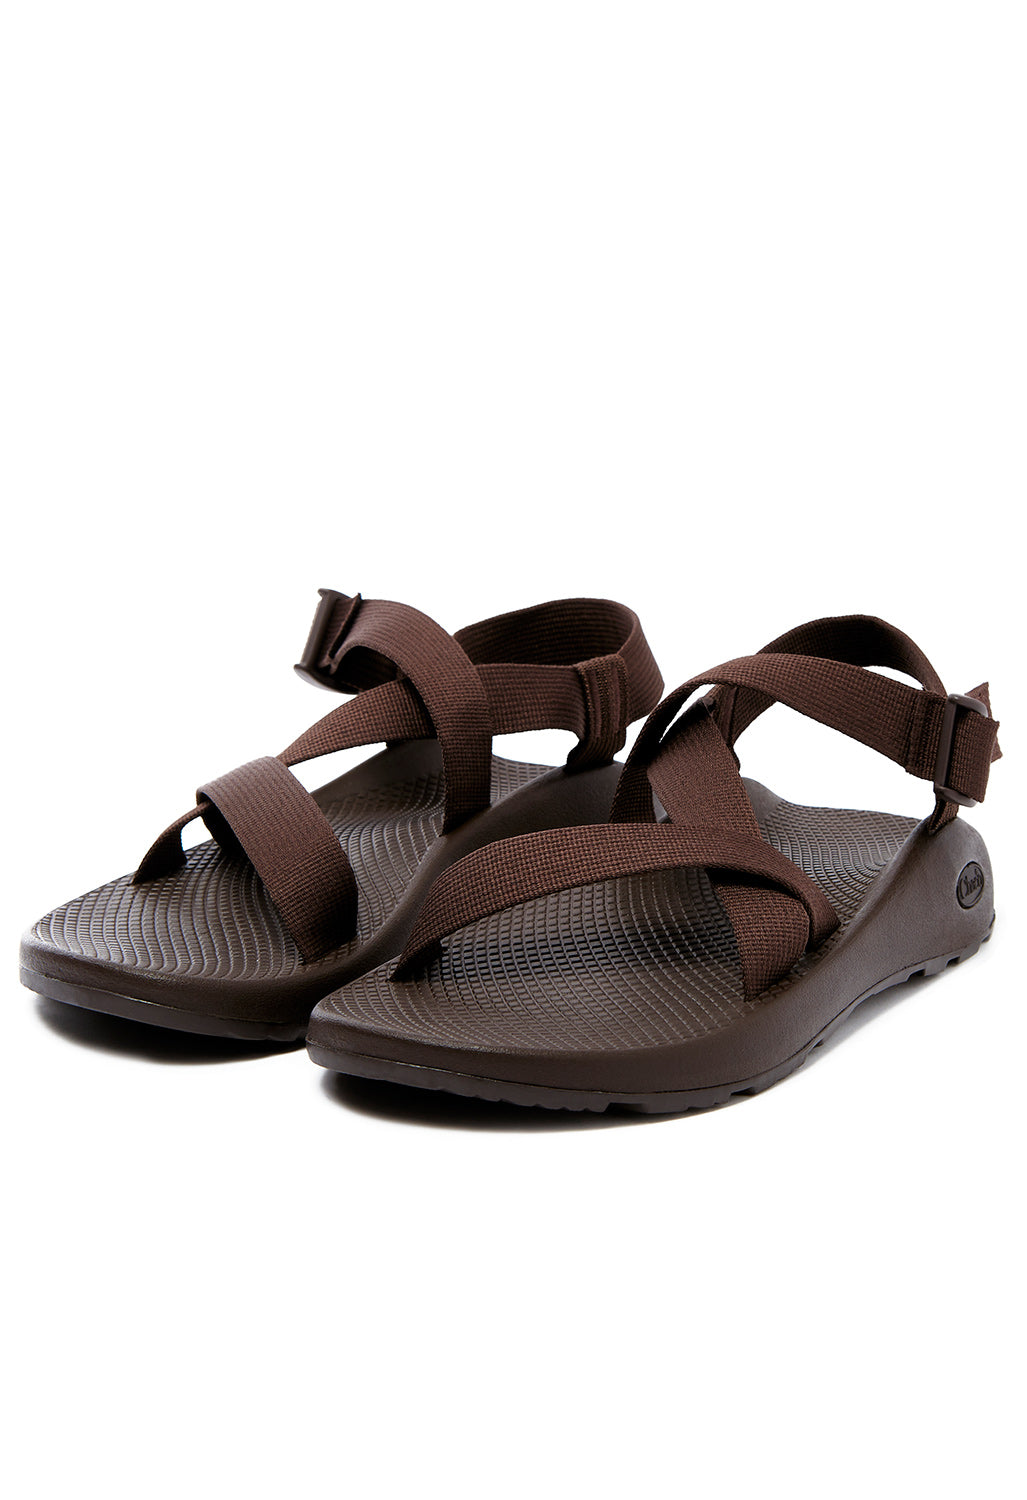 Chaco Men's Z1 Classic Sandals - Java